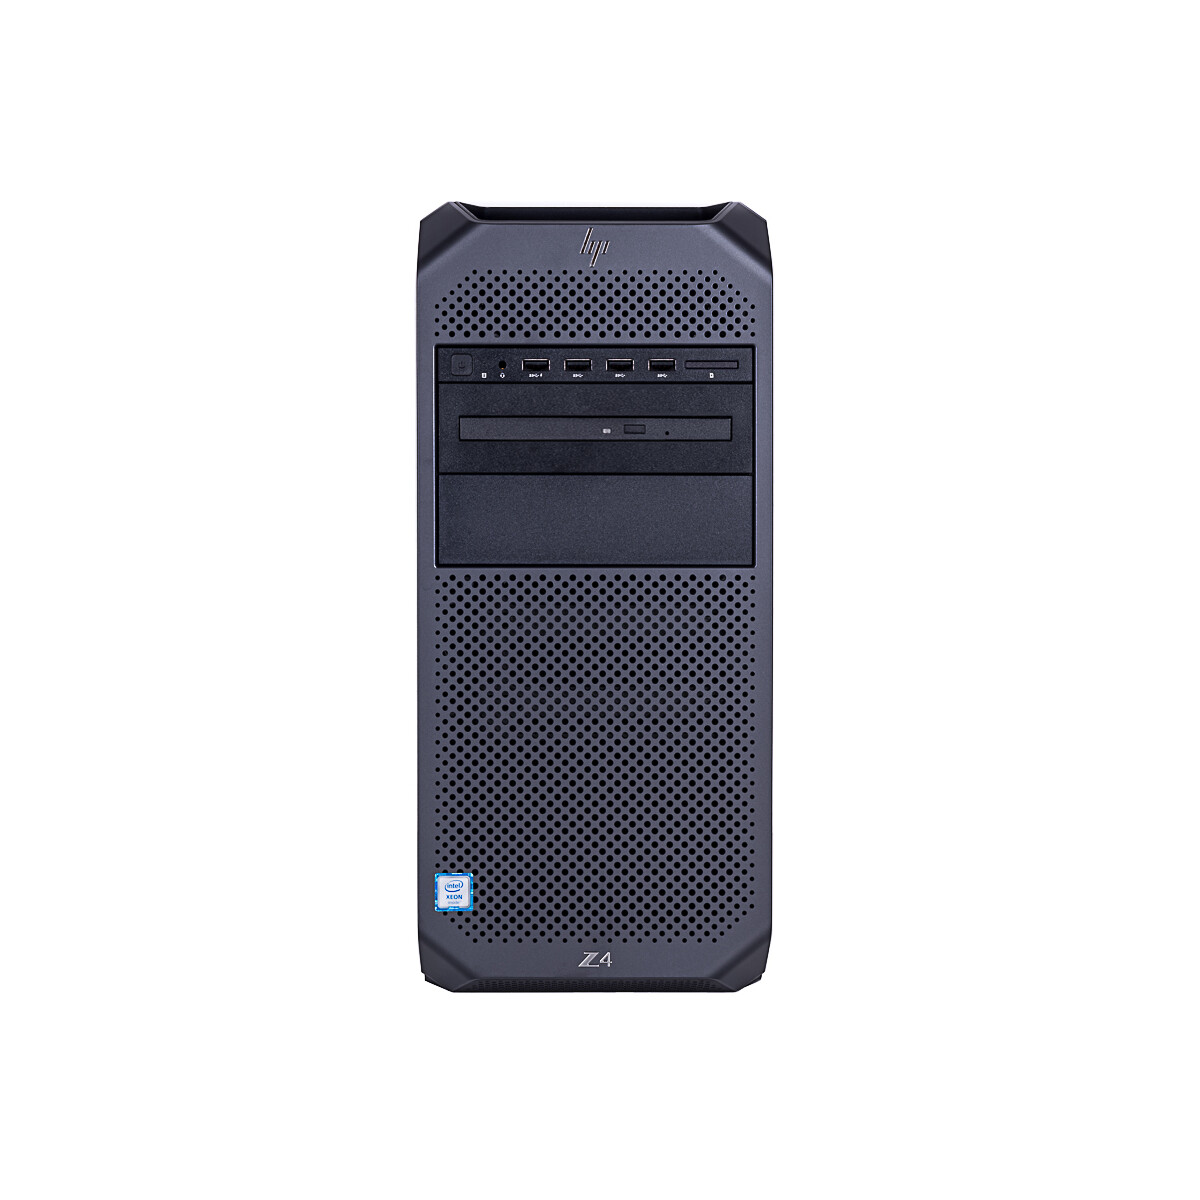 HP Z4 G4 Business Workstation 8-Core Intel Xeon W-2145, max. 4.50GHz, 32GB DDR4, 512GB M.2 SSD (NEW), NVIDIA Quadro P5000 (16GB), WIN 10 Pro